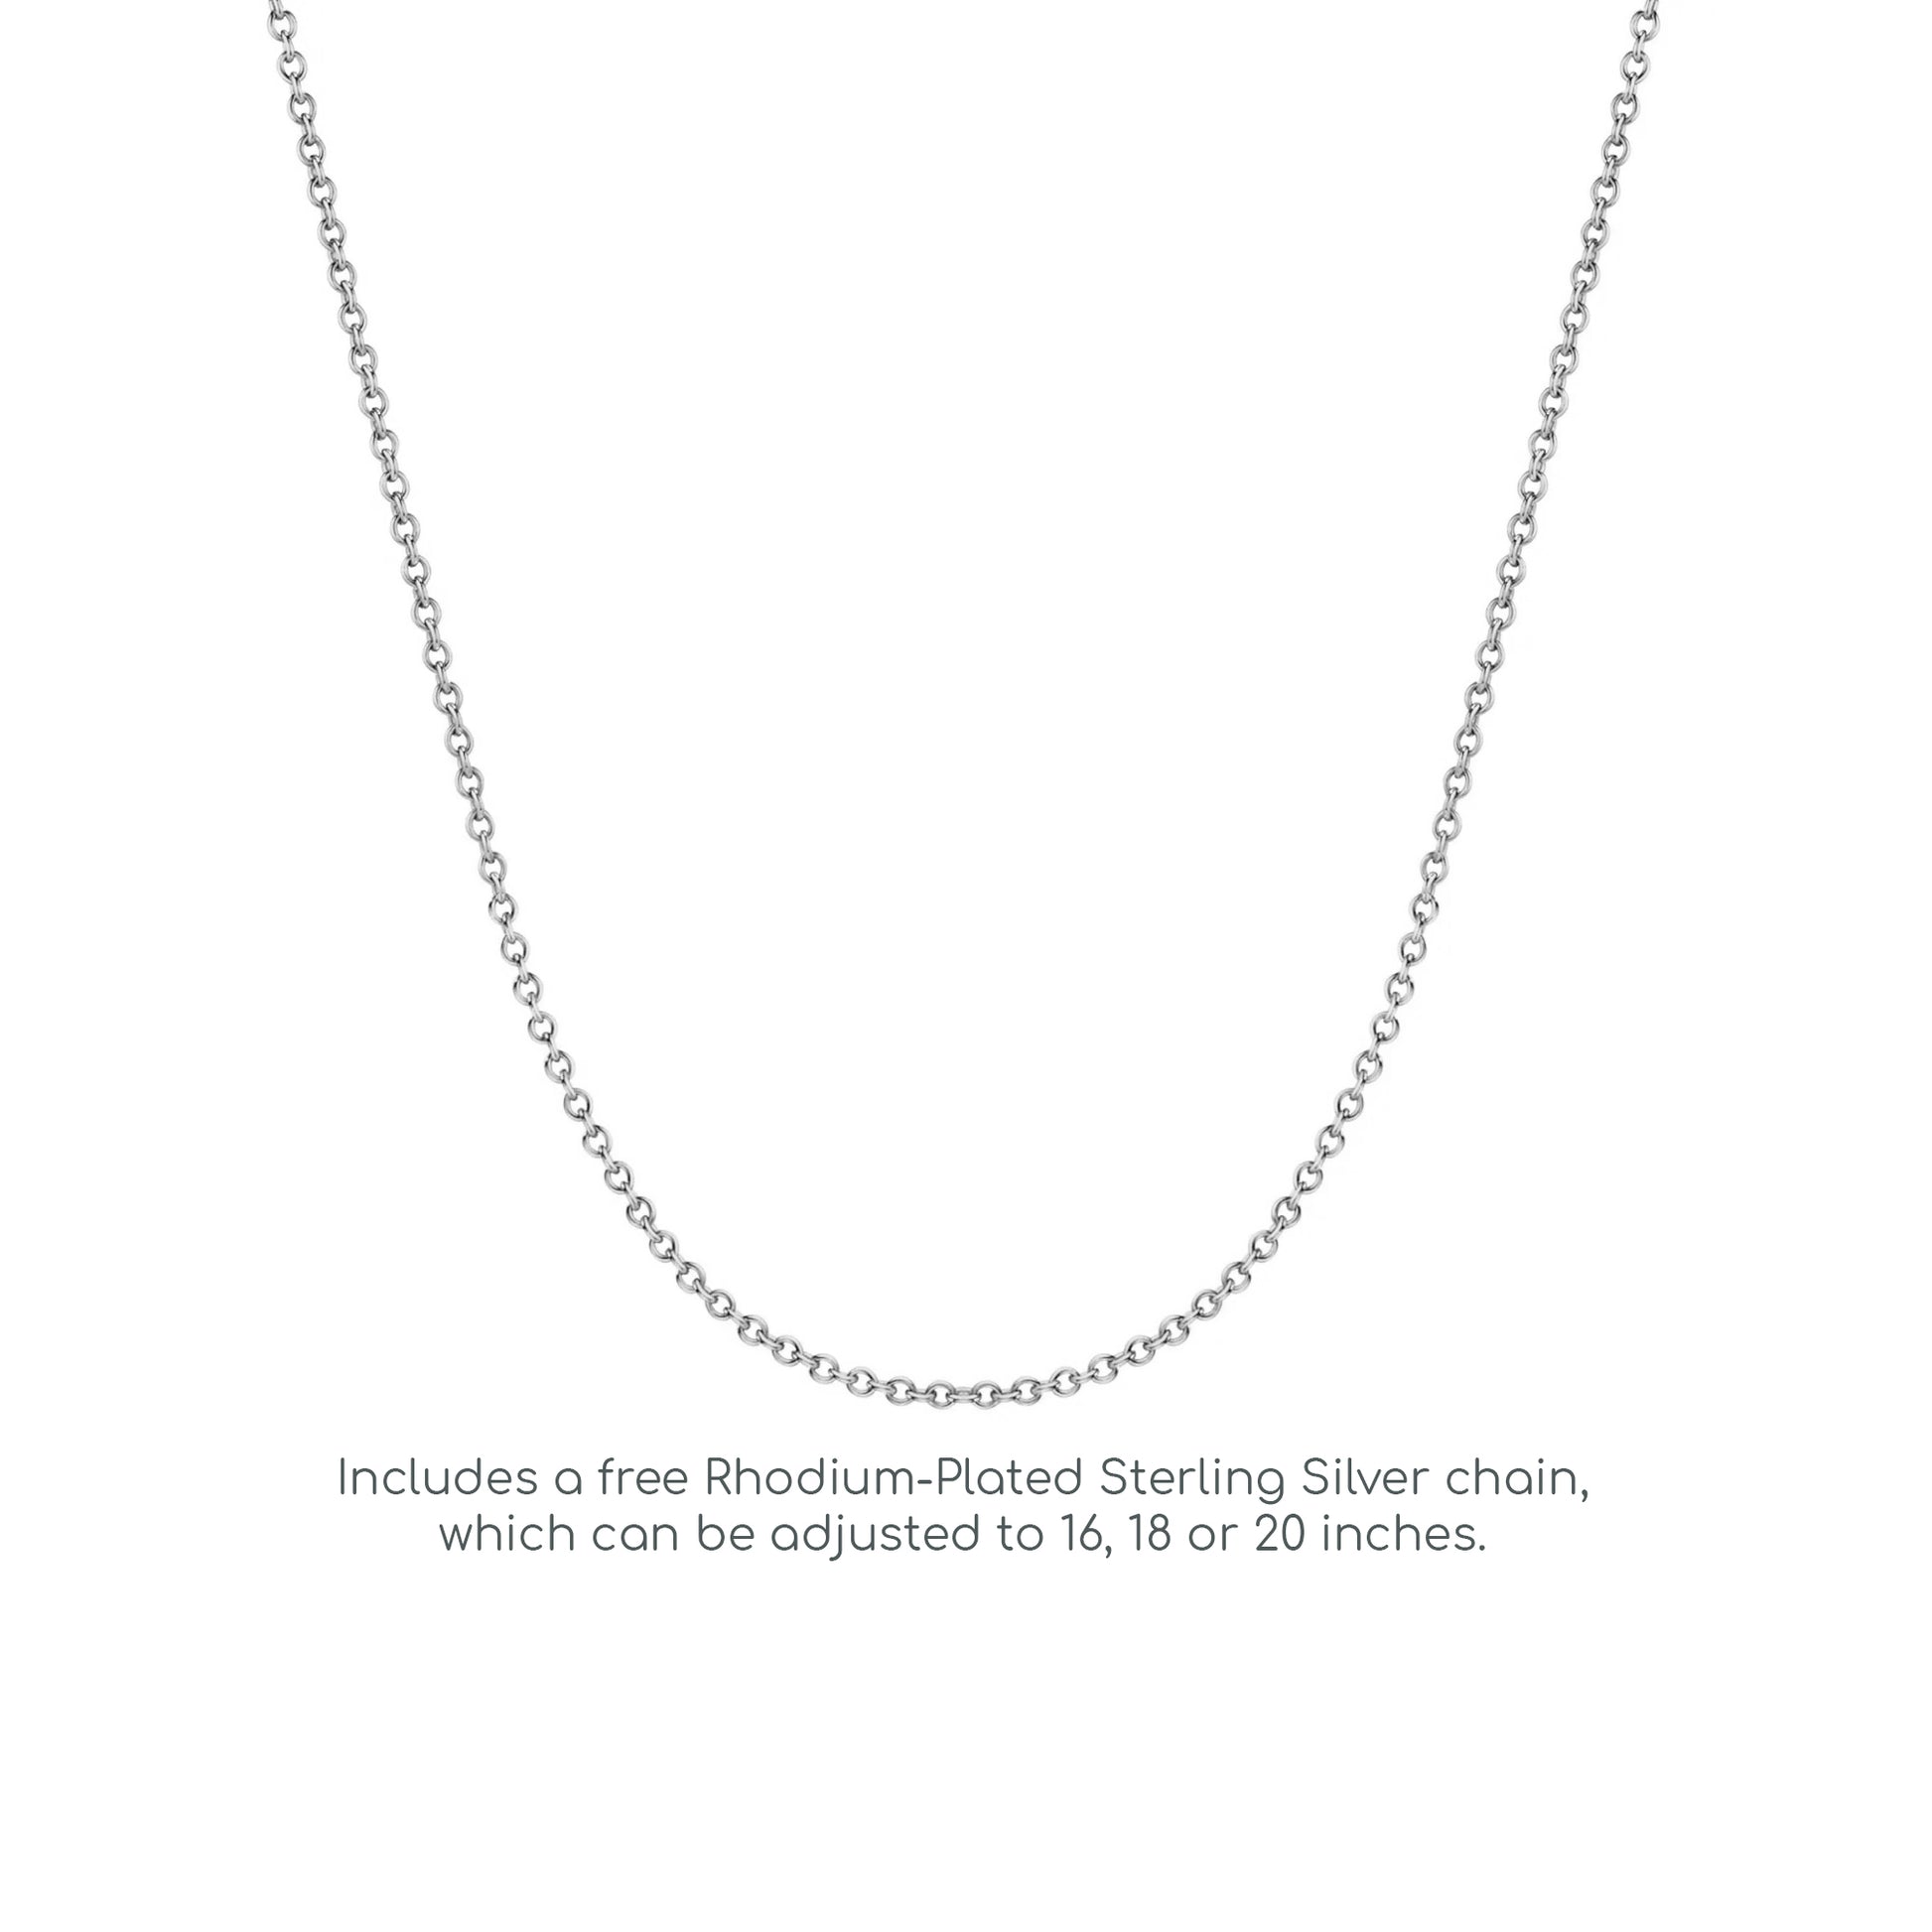 Silver  Black CZ Pave Love Heart Pendant Necklace 18 inch - GVP213